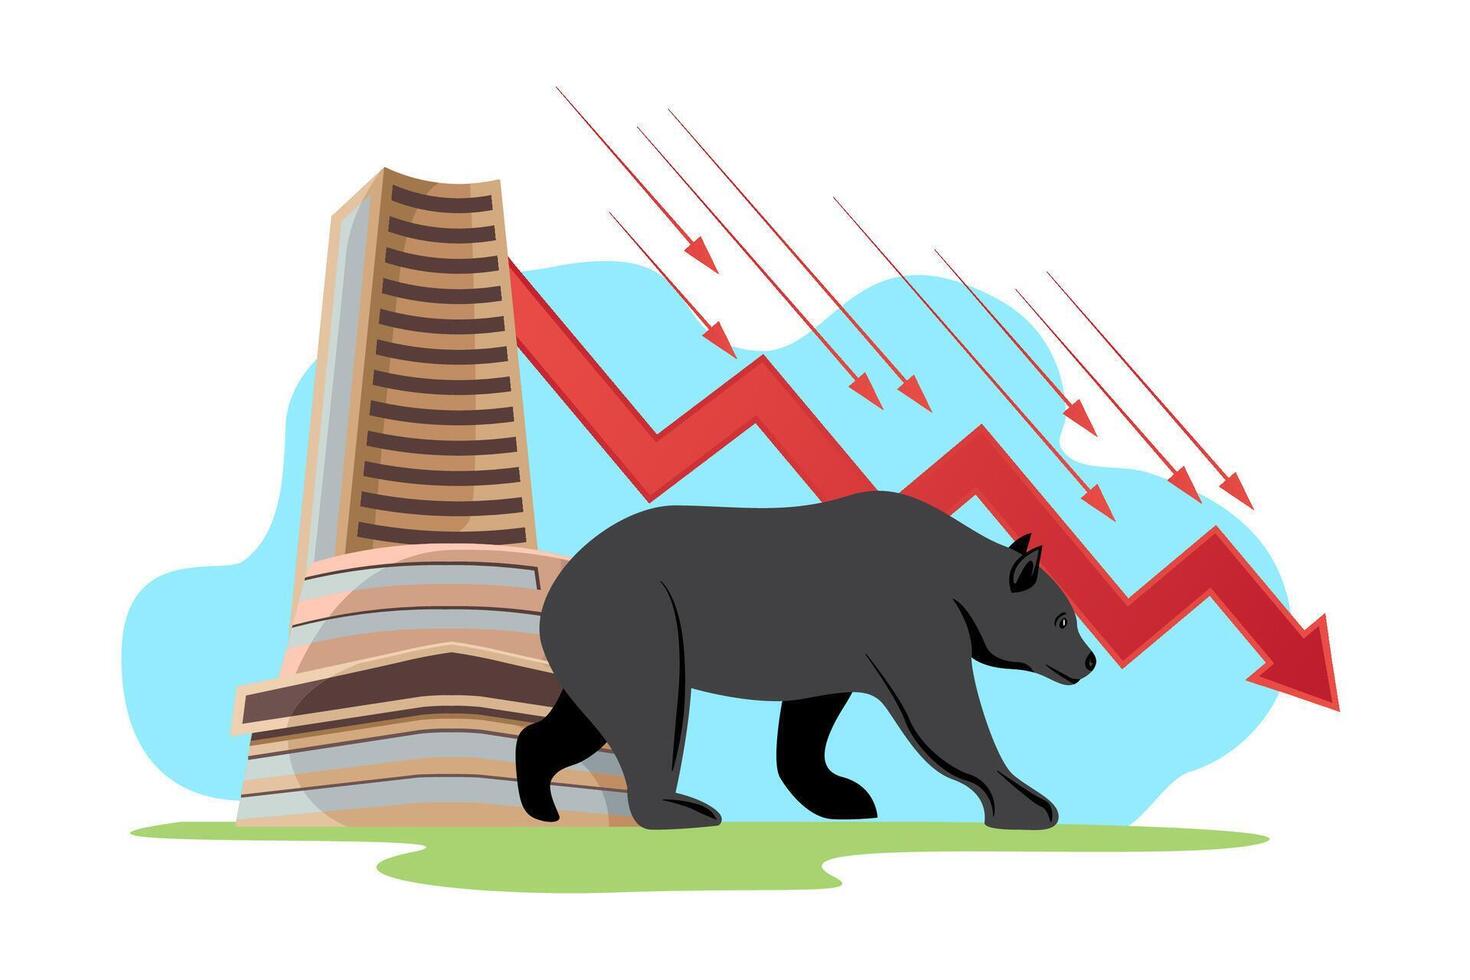 Bombay stock exchange bear run loss vector